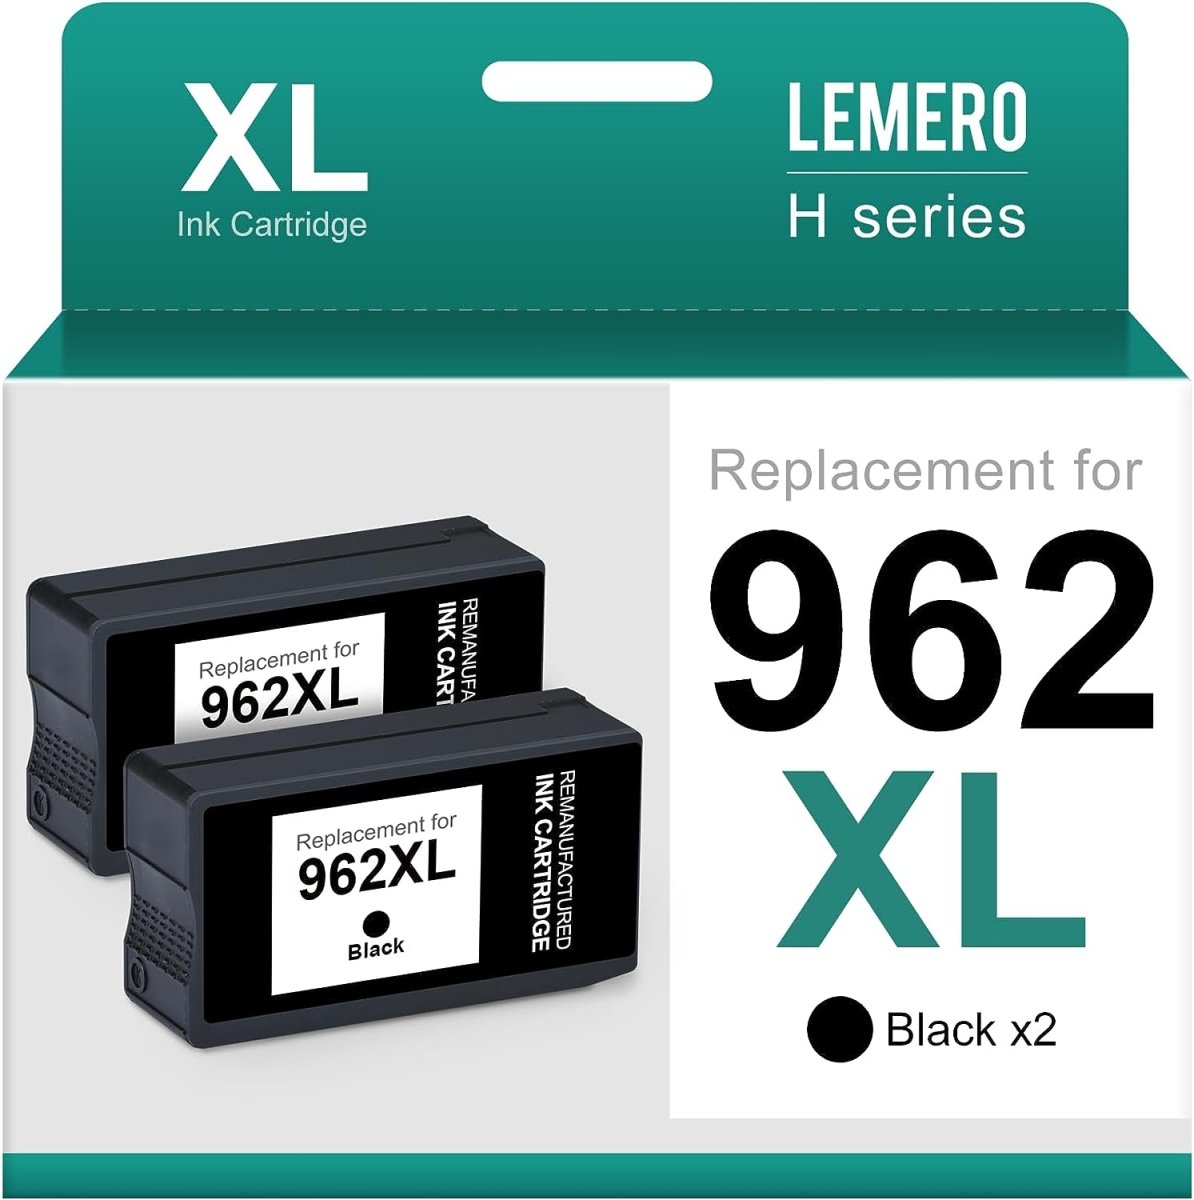 962XL Remanufactured Ink Cartridges for HP Printer (Black, 2-Pack) - Linford Office:Printer Ink & Toner Cartridge